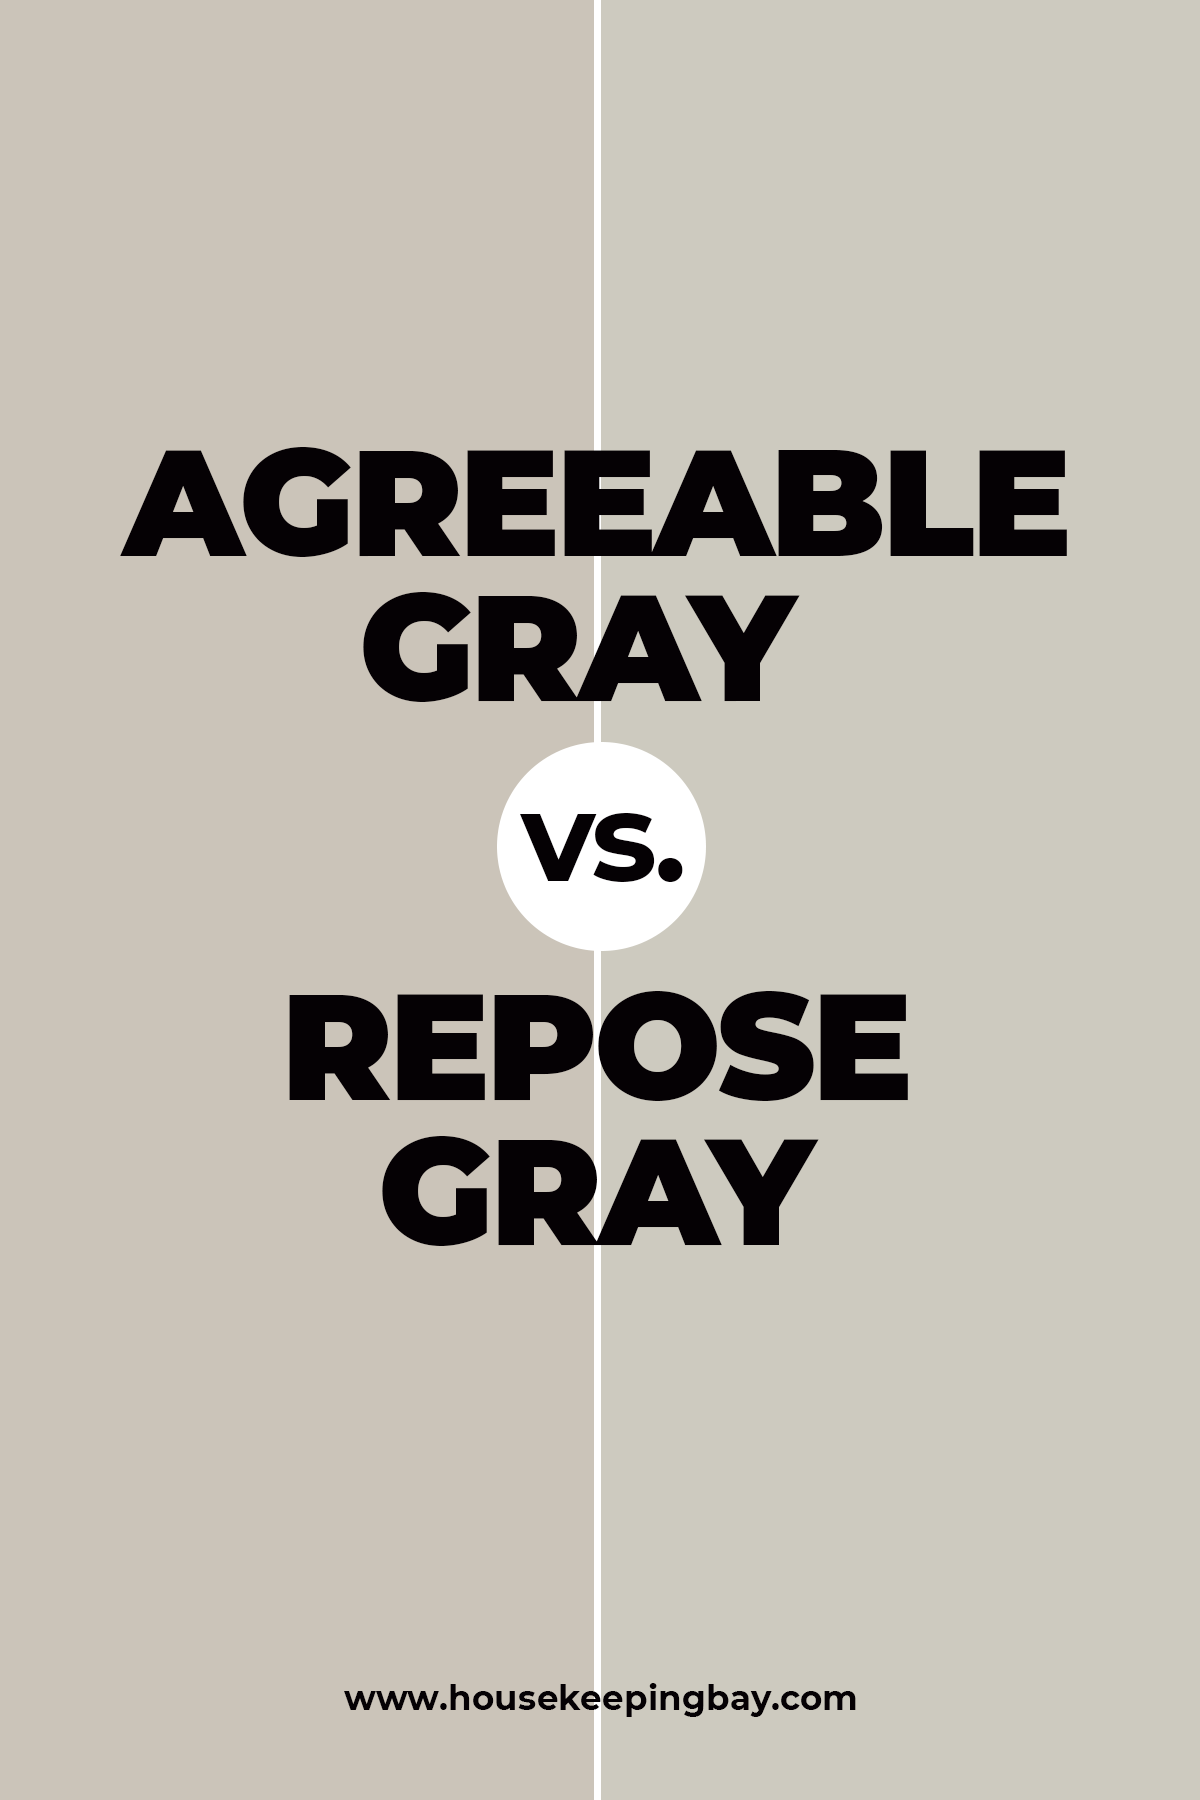 Agreeable Gray vs. Repose Gray